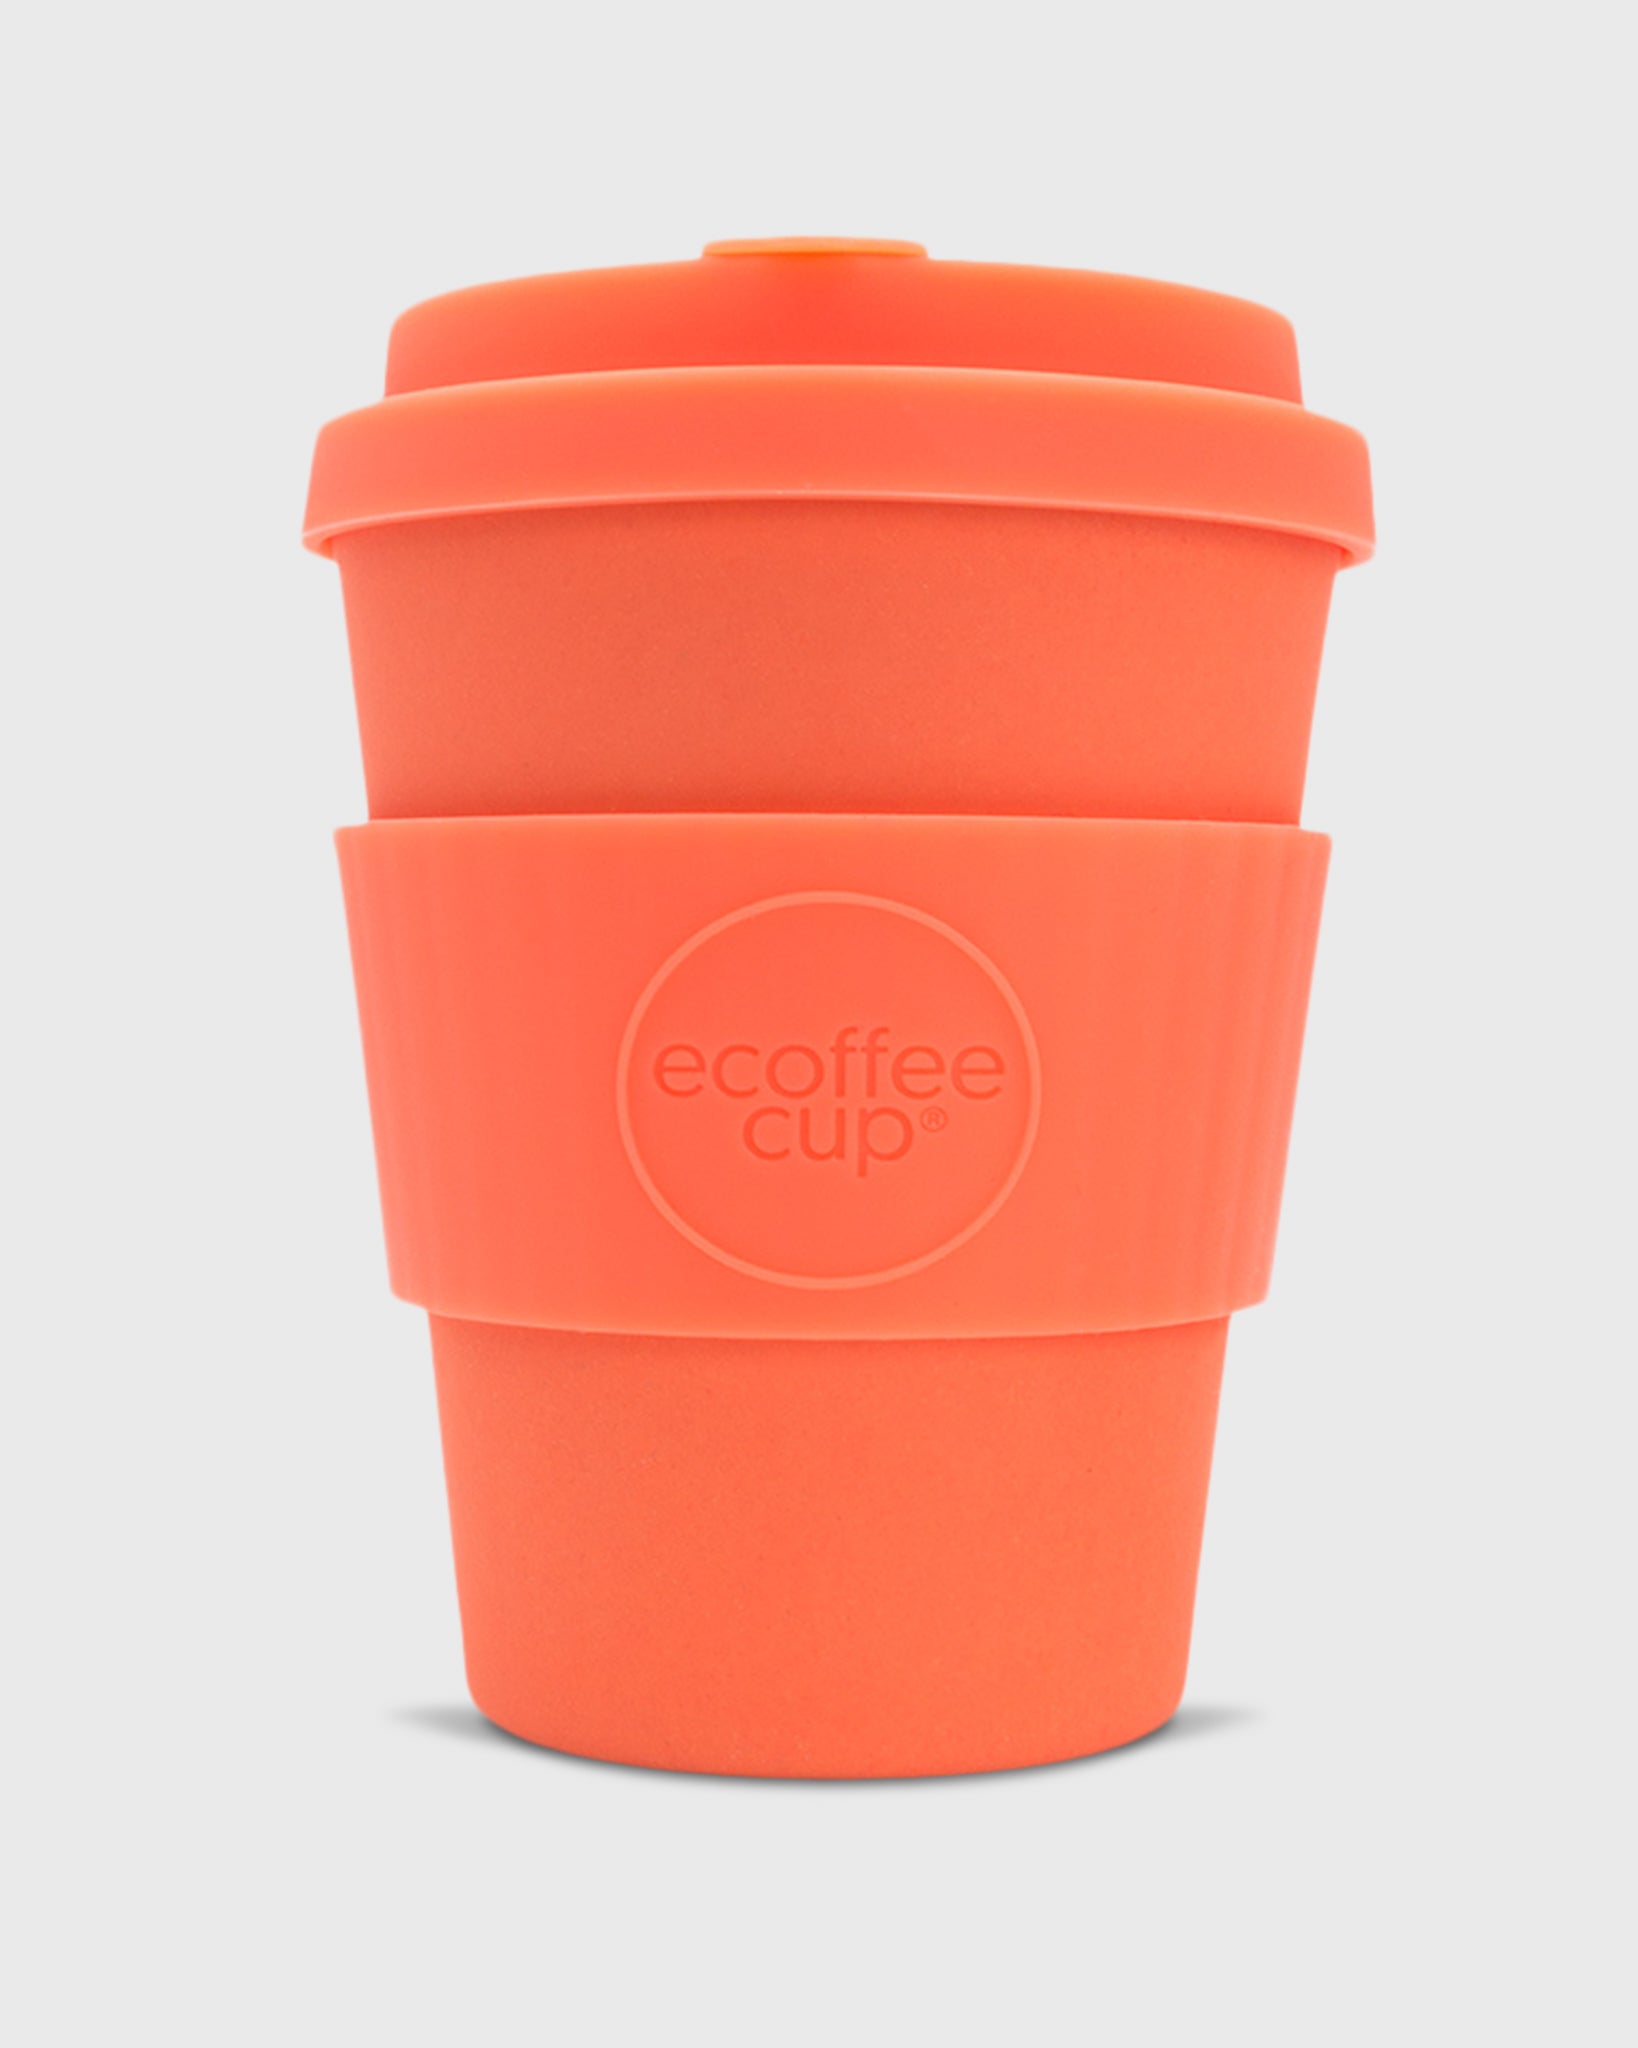 12 oz. Reusable Coffee Cup Mrs. Mills